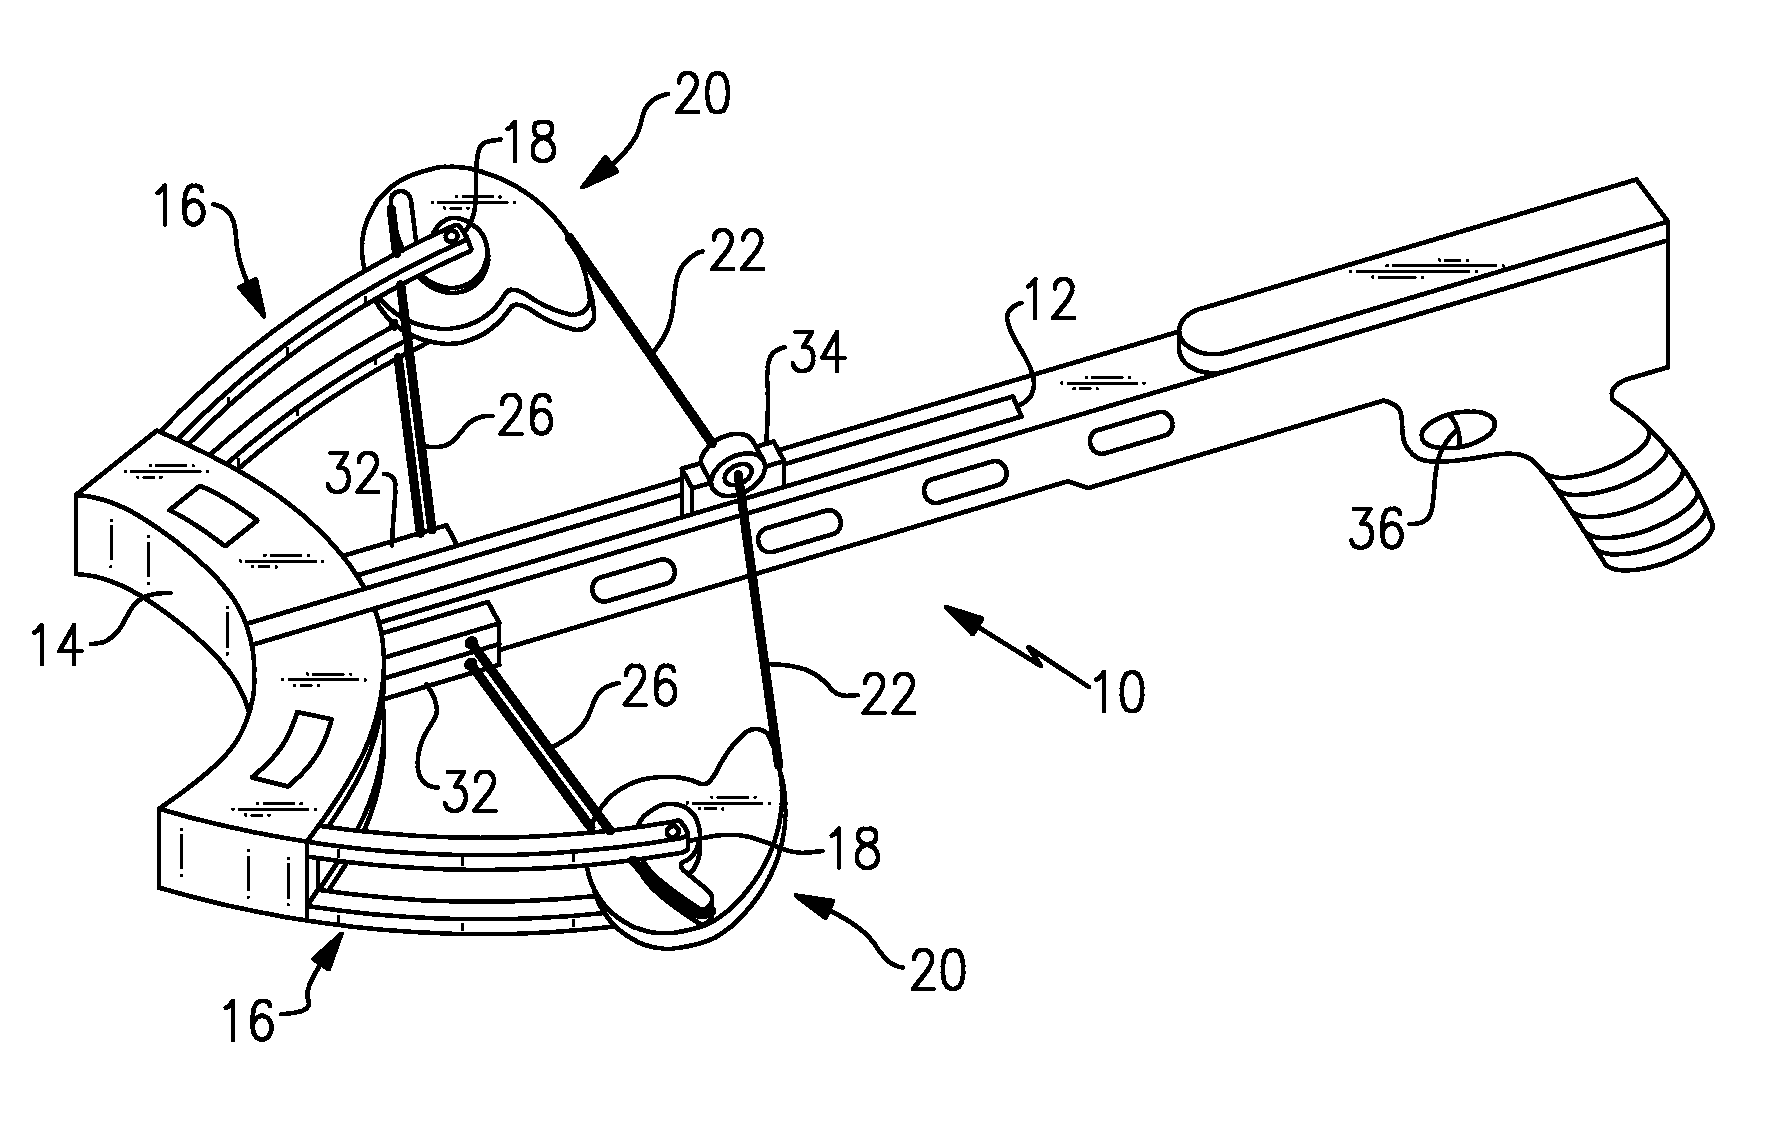 Bowstring cam arrangement for compound crossbow